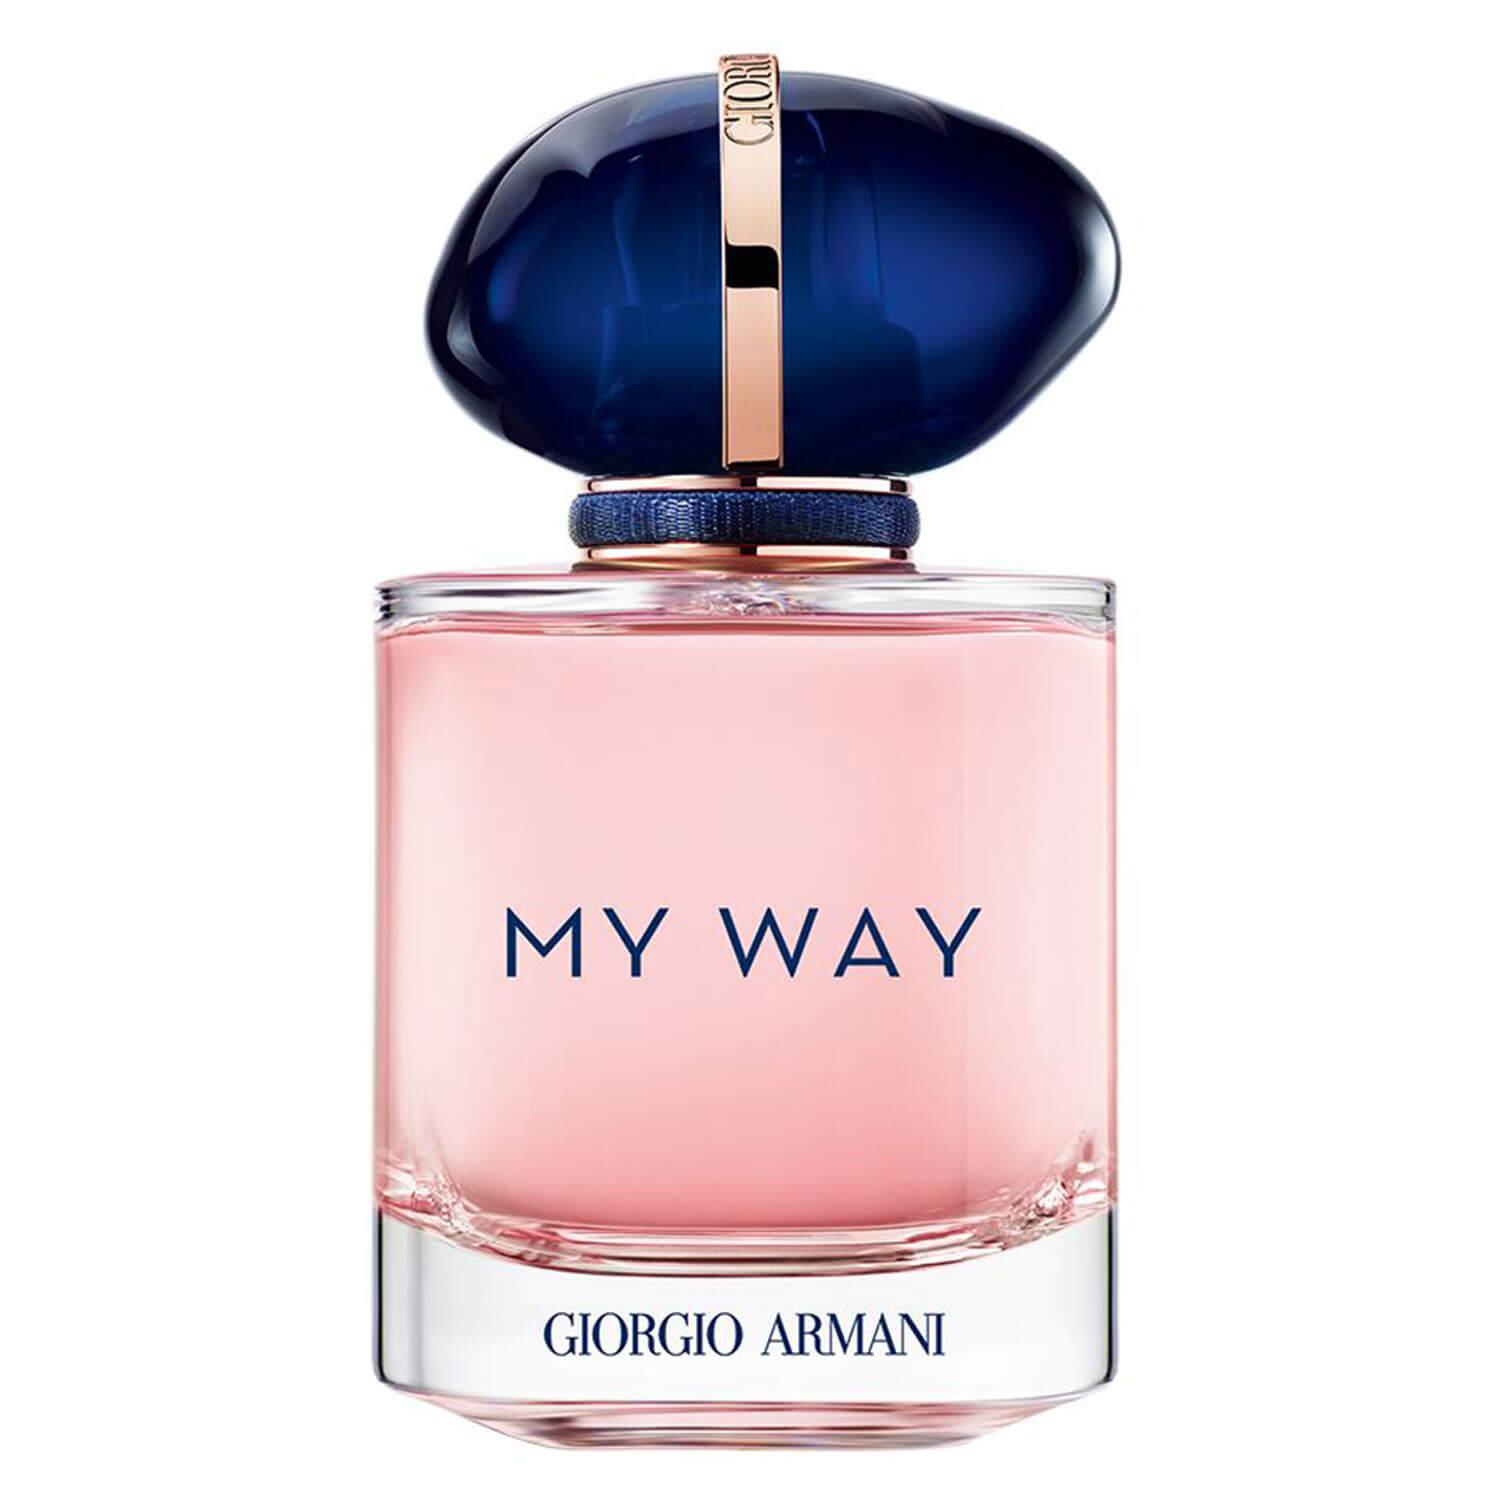 MY WAY - Eau de Parfum